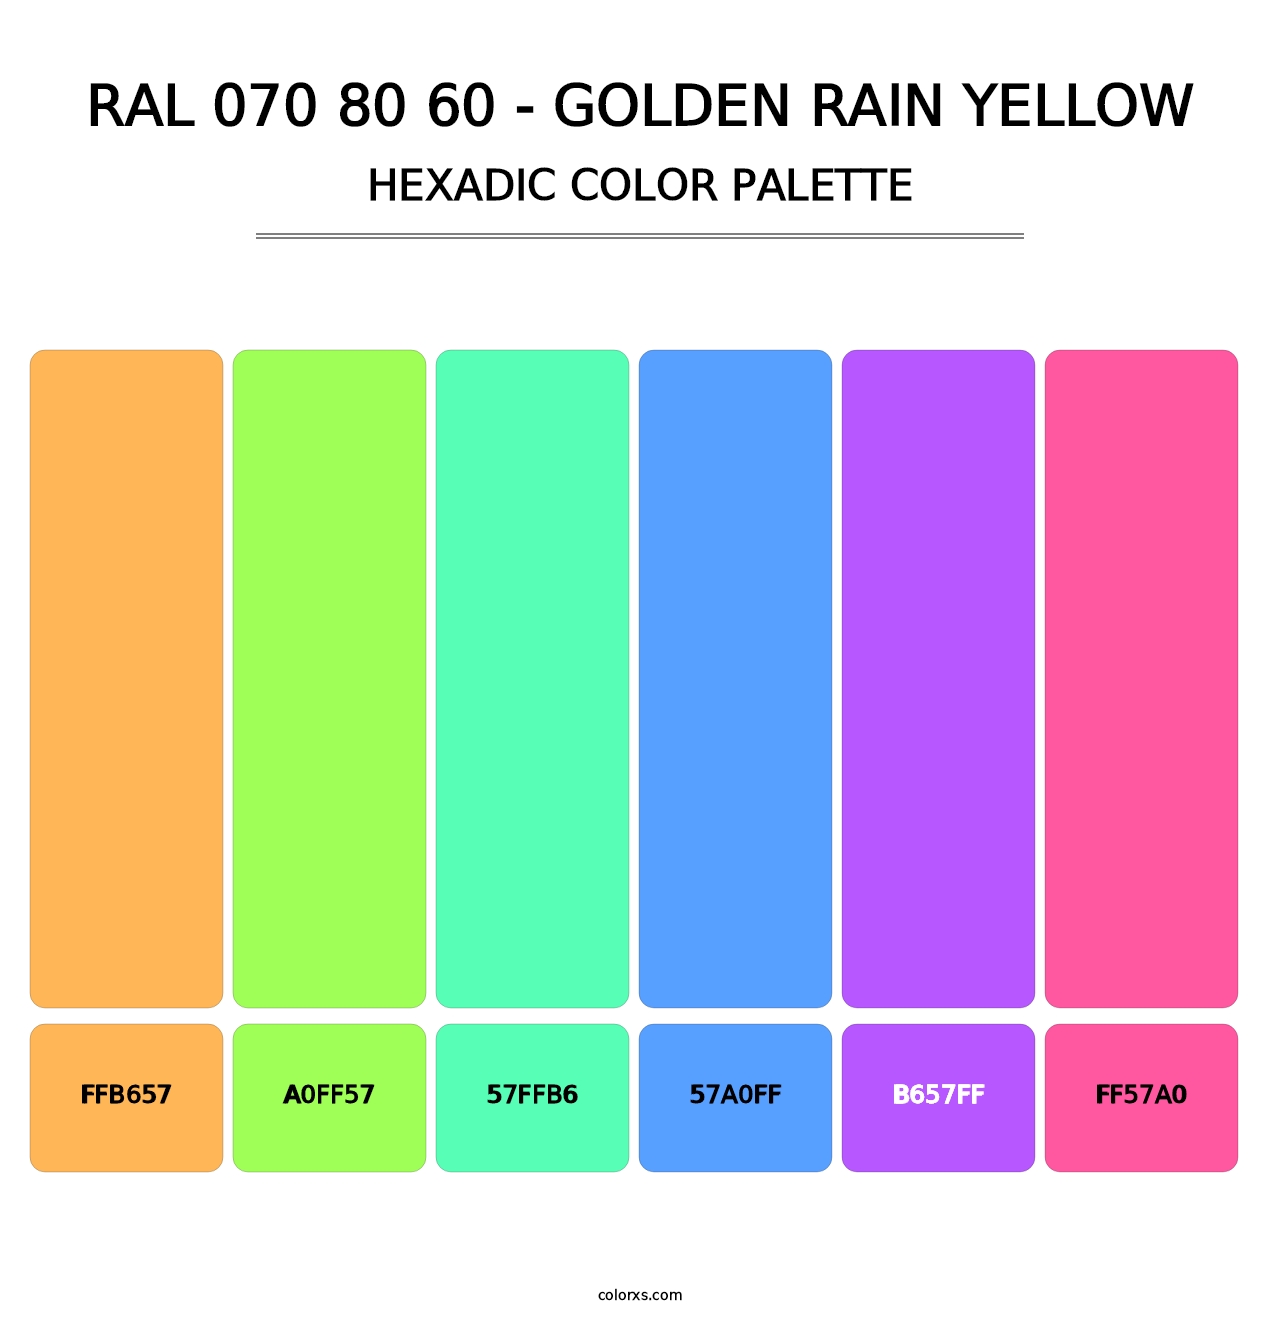 RAL 070 80 60 - Golden Rain Yellow - Hexadic Color Palette